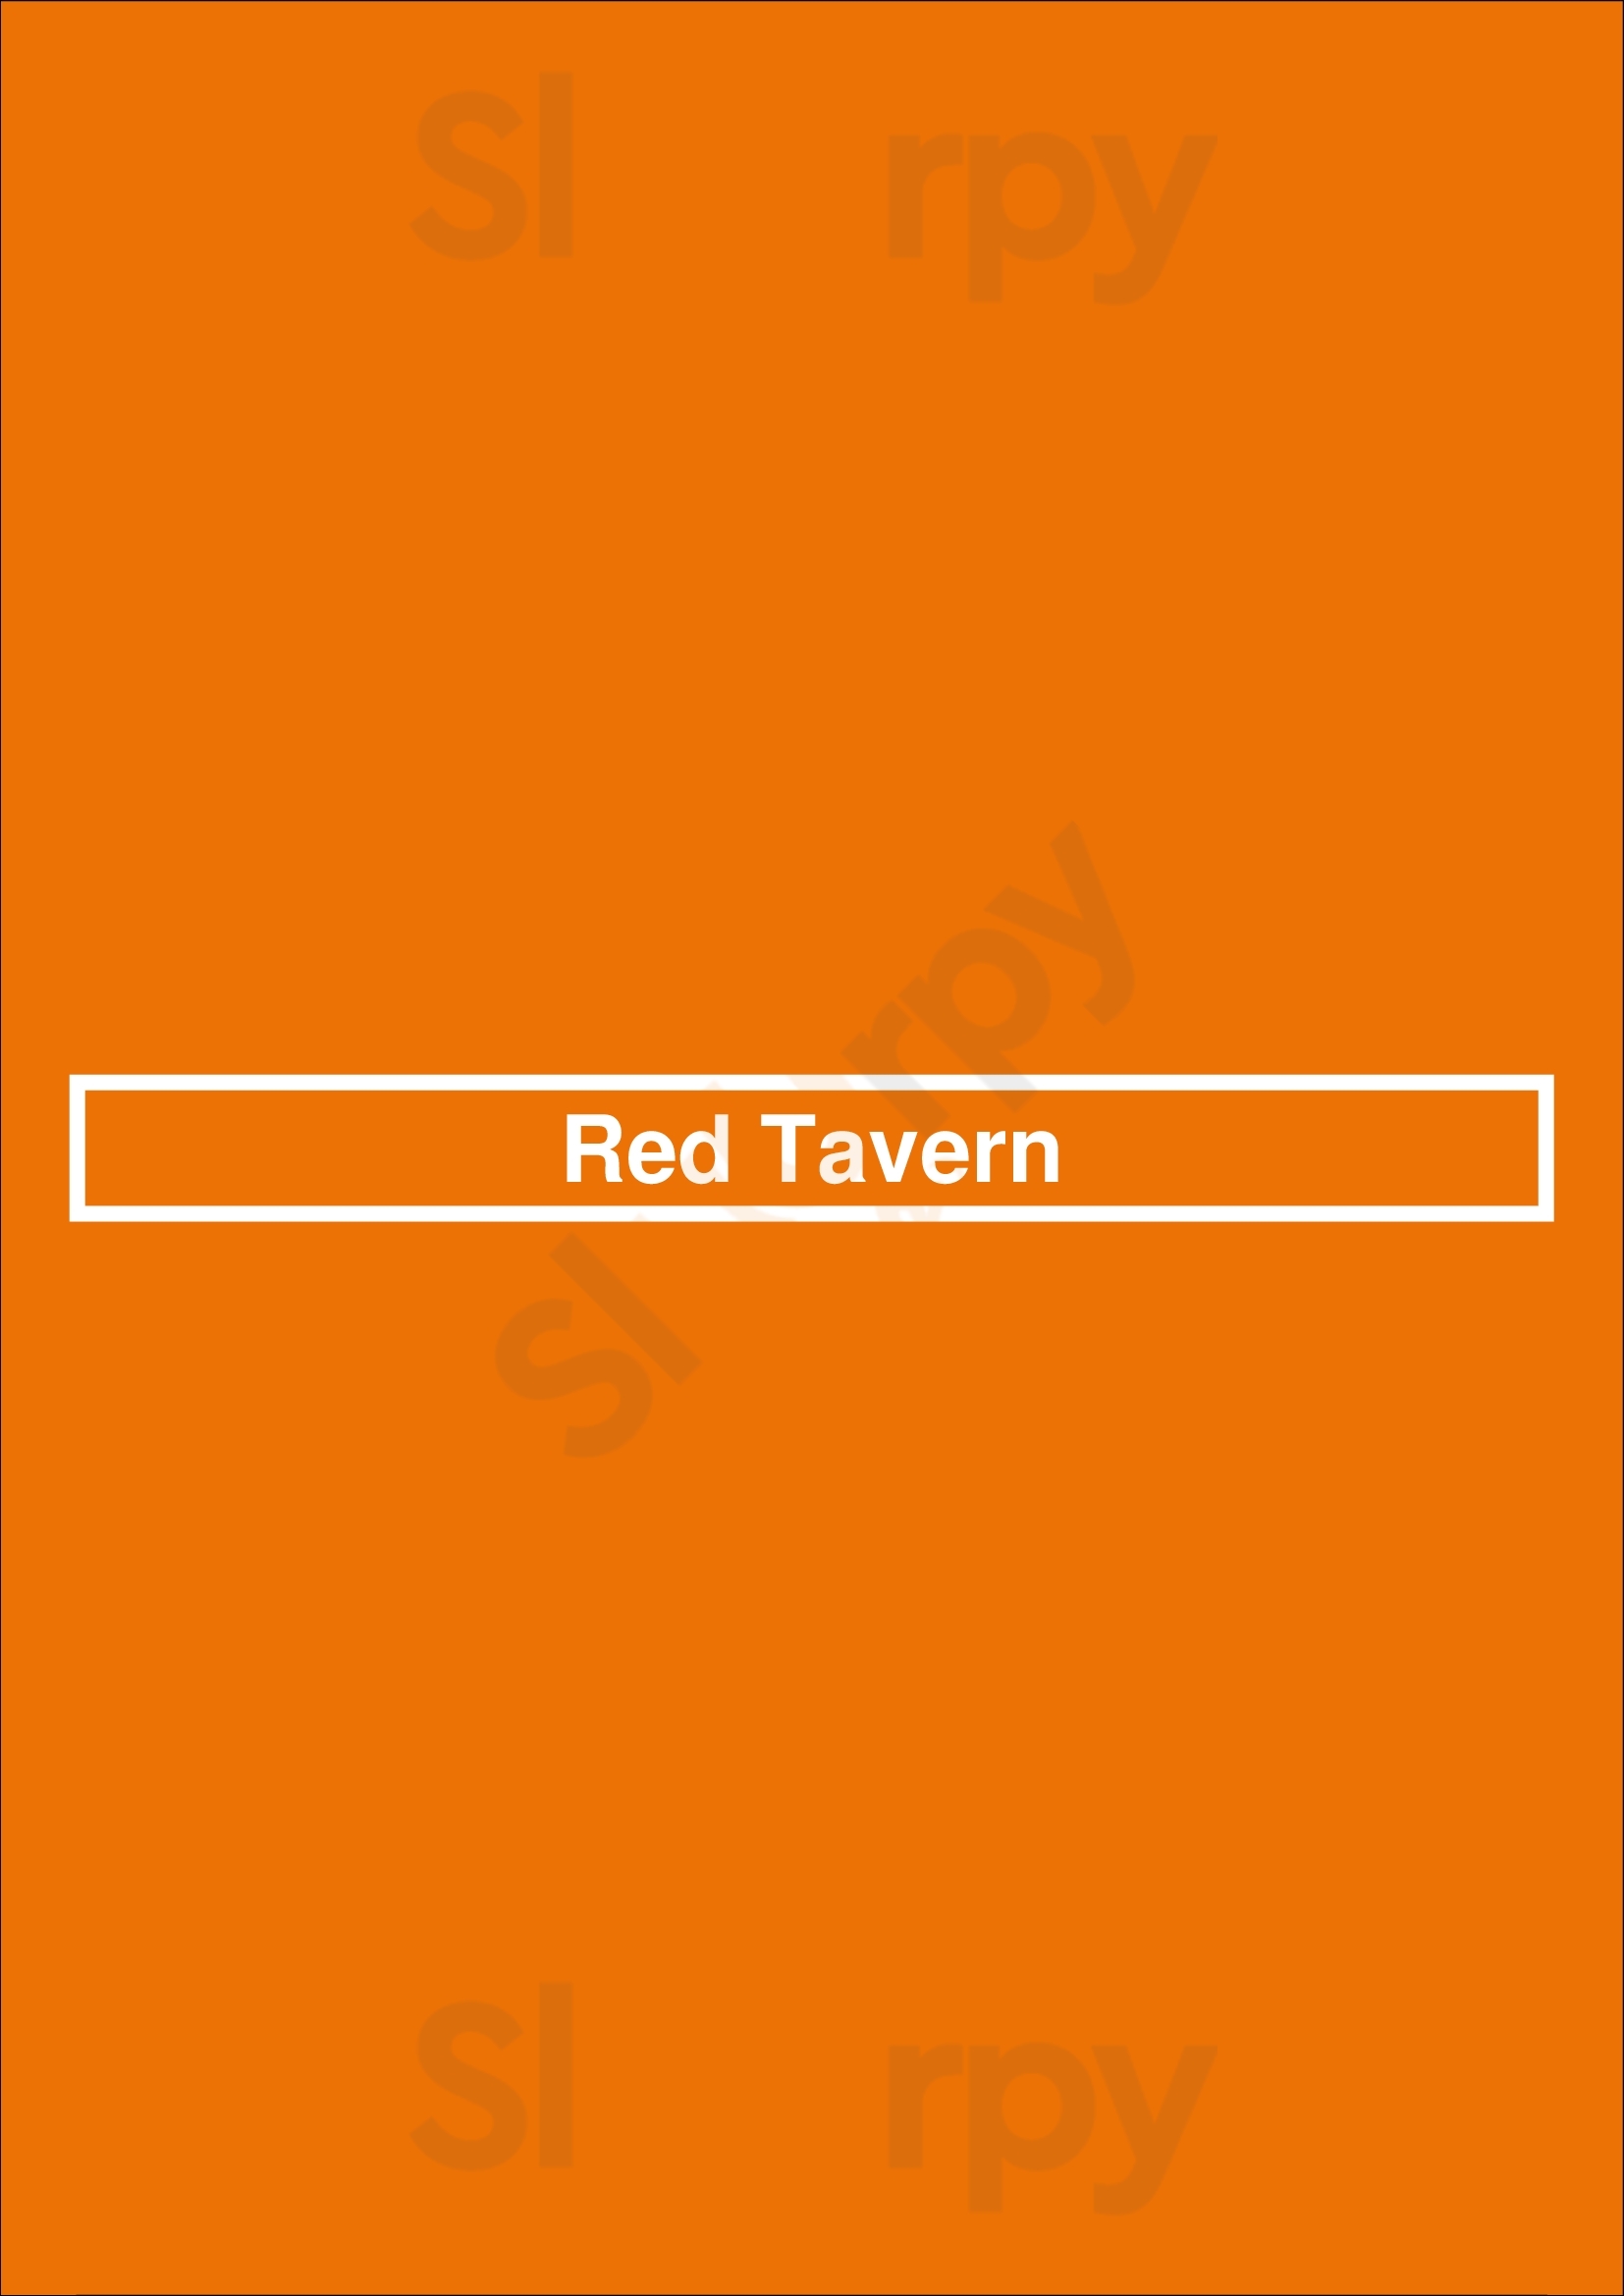 Red Tavern San Francisco Menu - 1